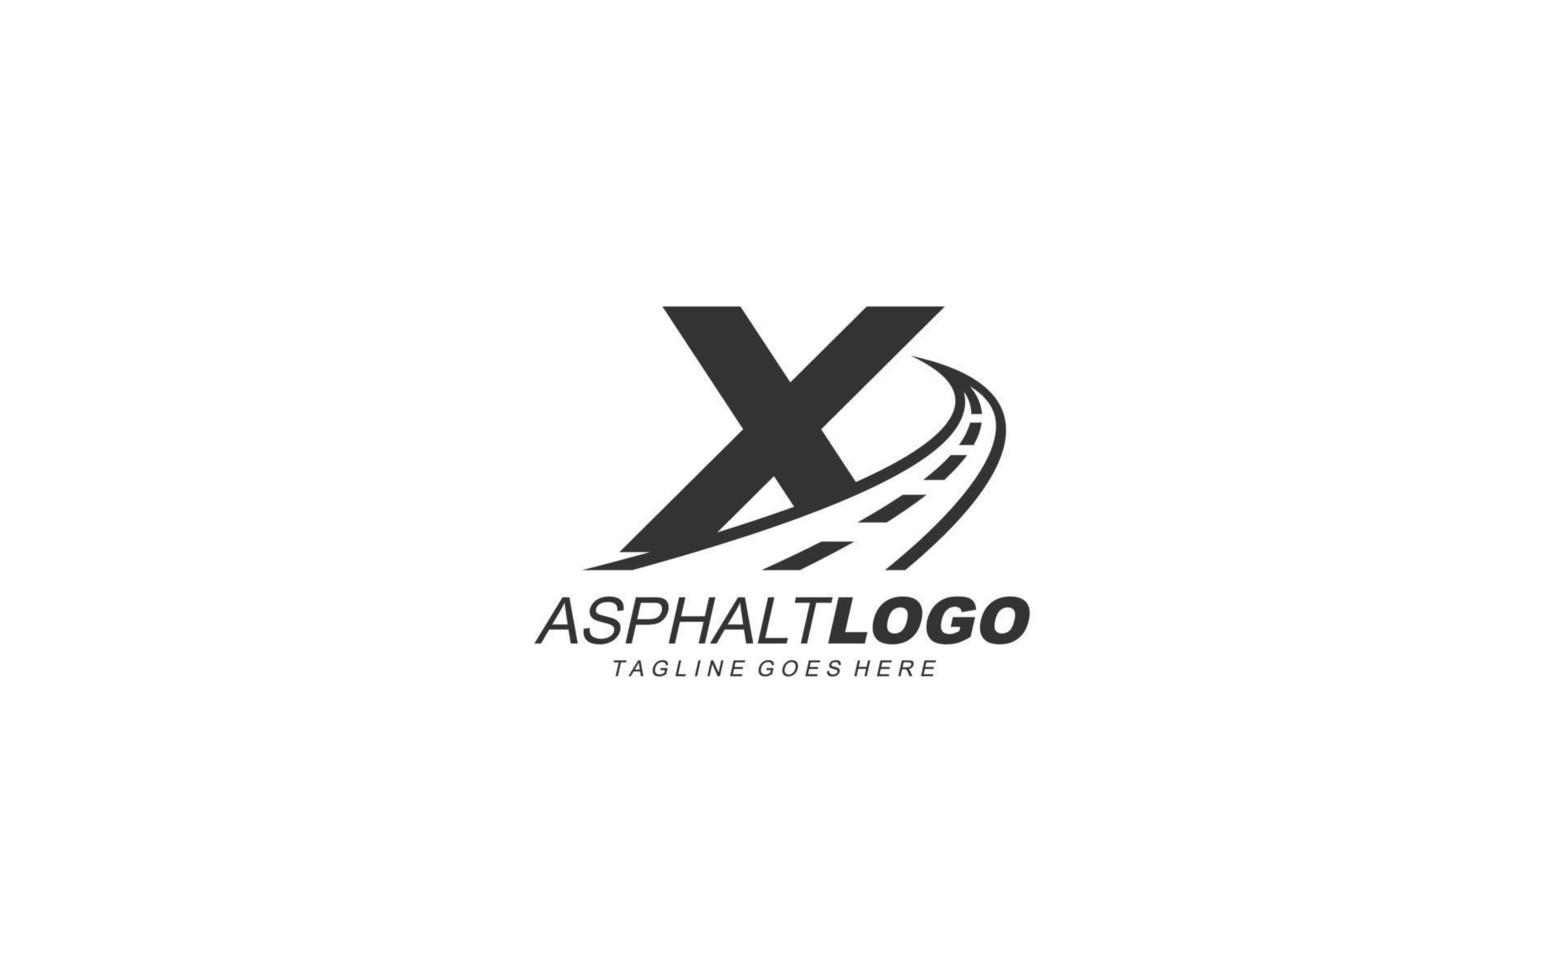 X logo asphalt for identity. construction template vector illustration for your brand.